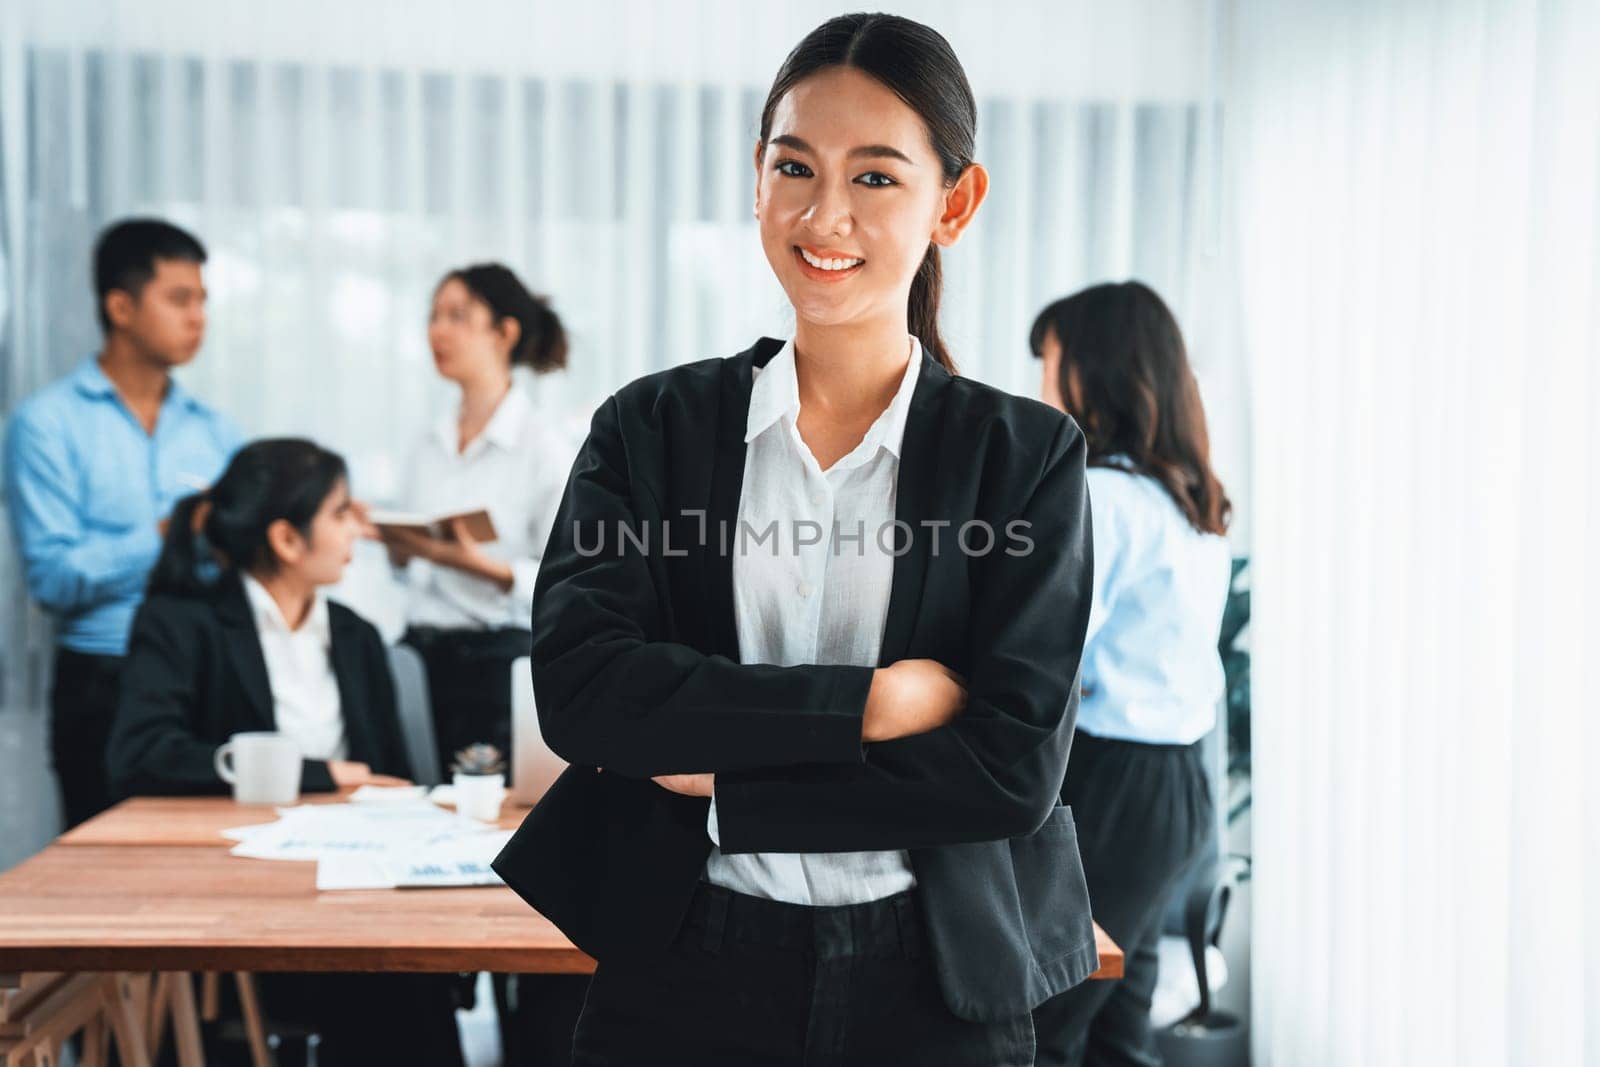 Businesswoman portrait and motion blur background. Habiliment by biancoblue